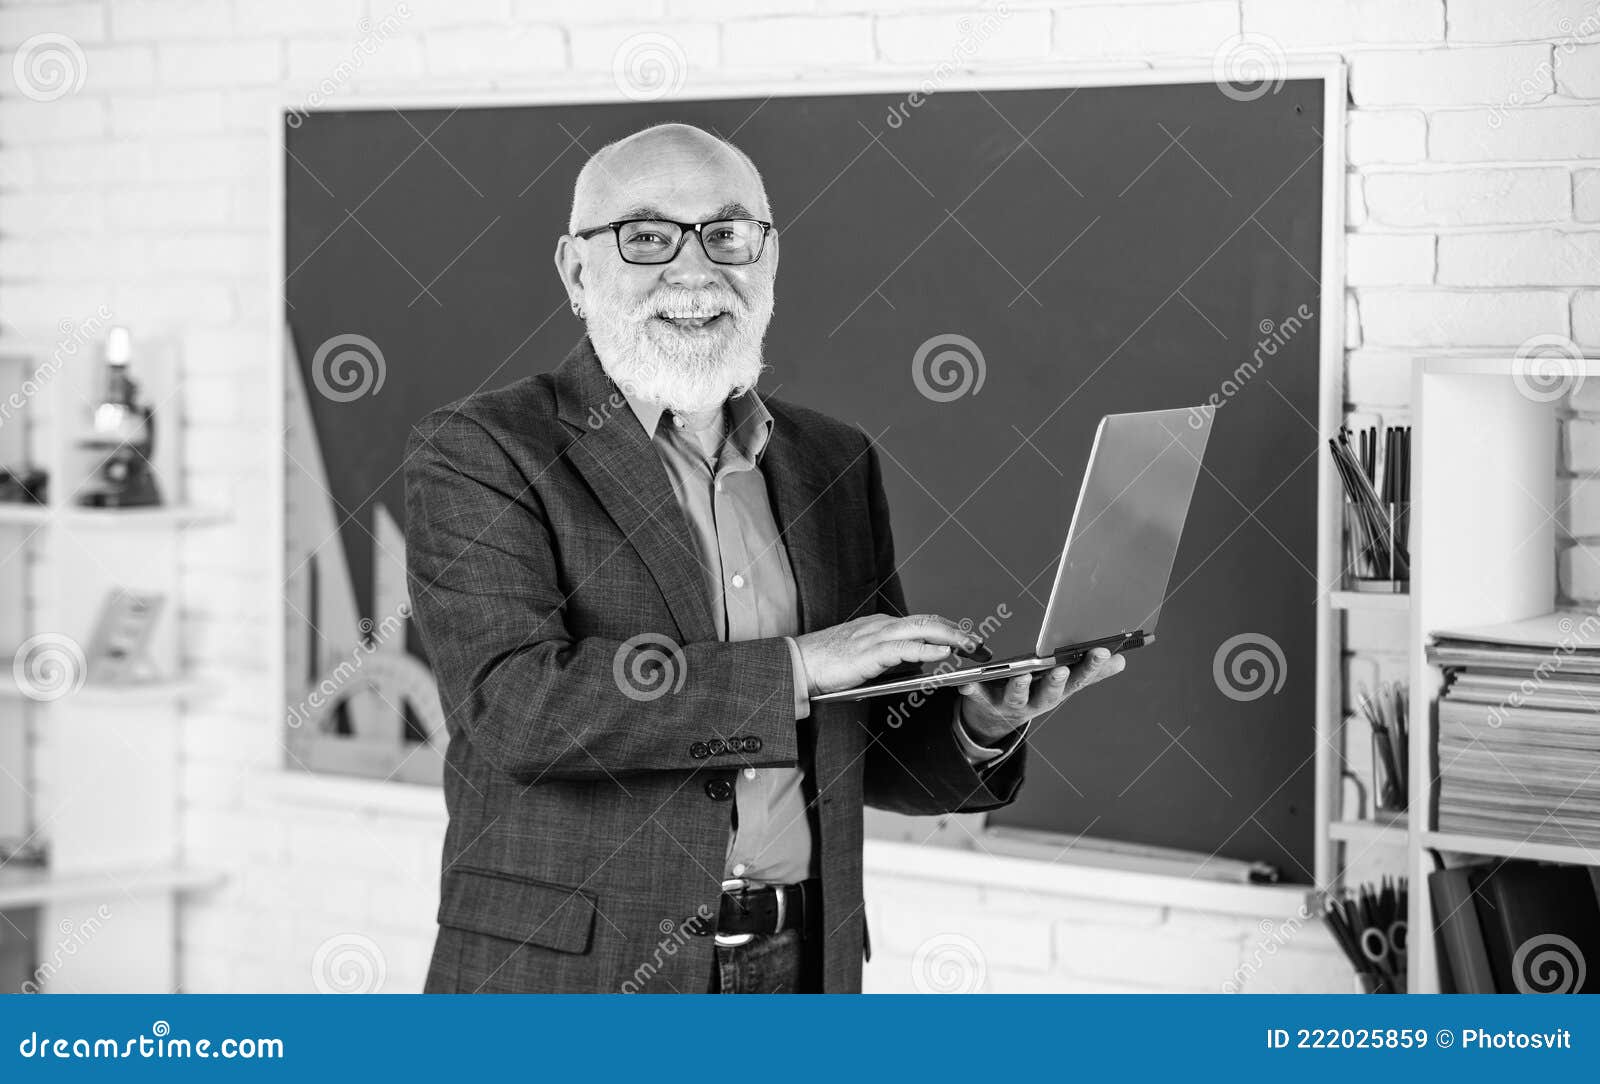 online service. videoconferencing keeps homebound students connected. senior intelligent man teacher use laptop. distant